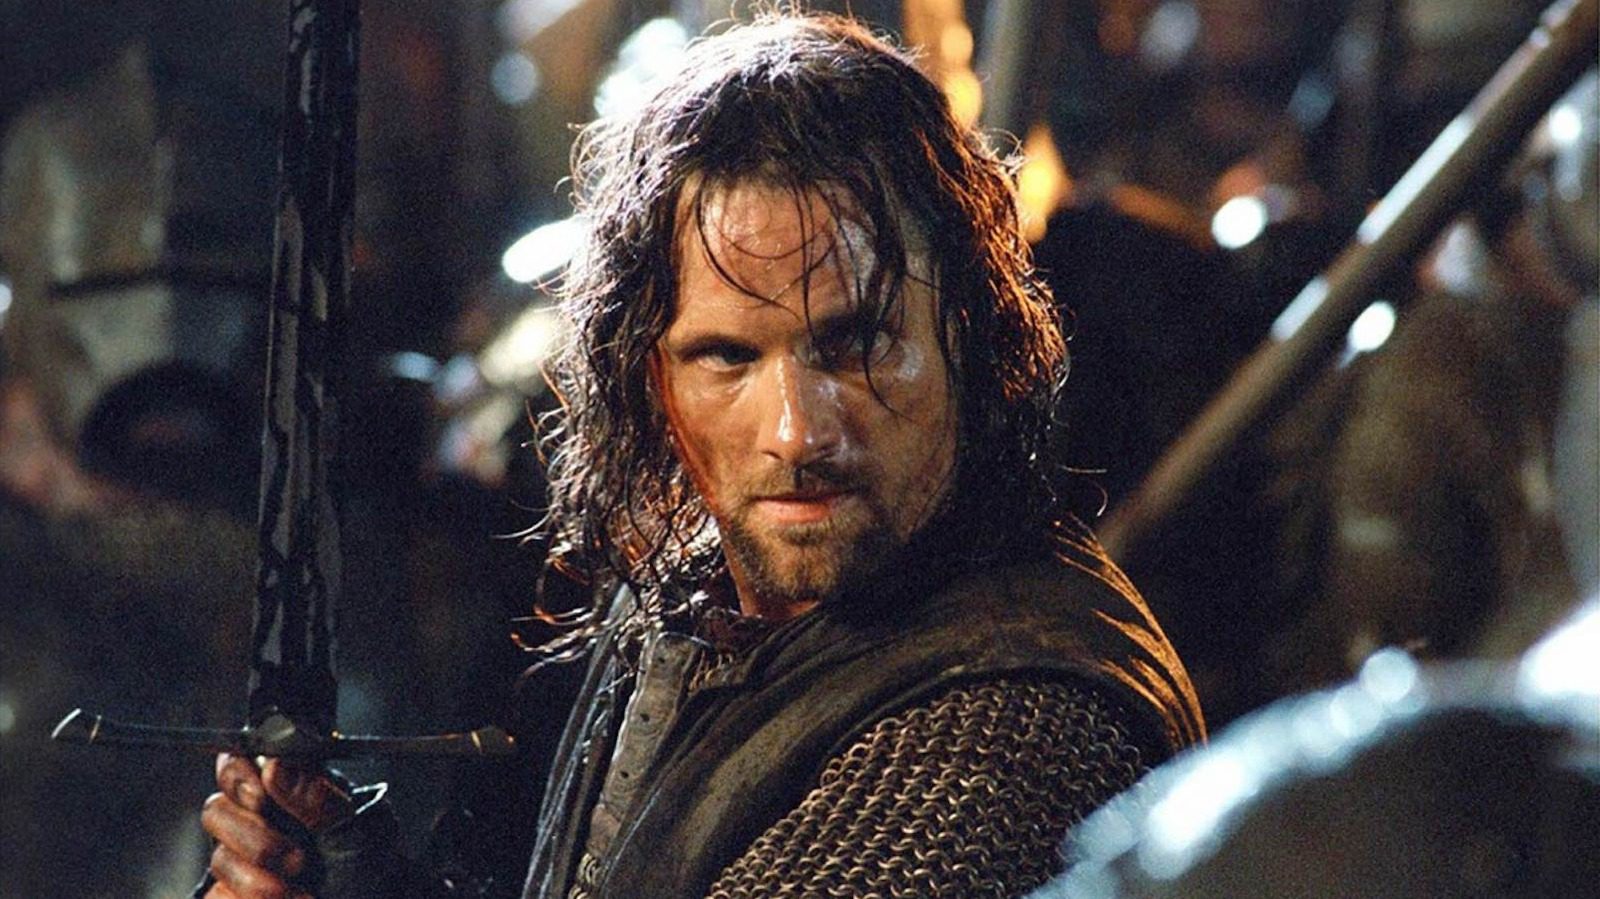 Aragorn, the warrior